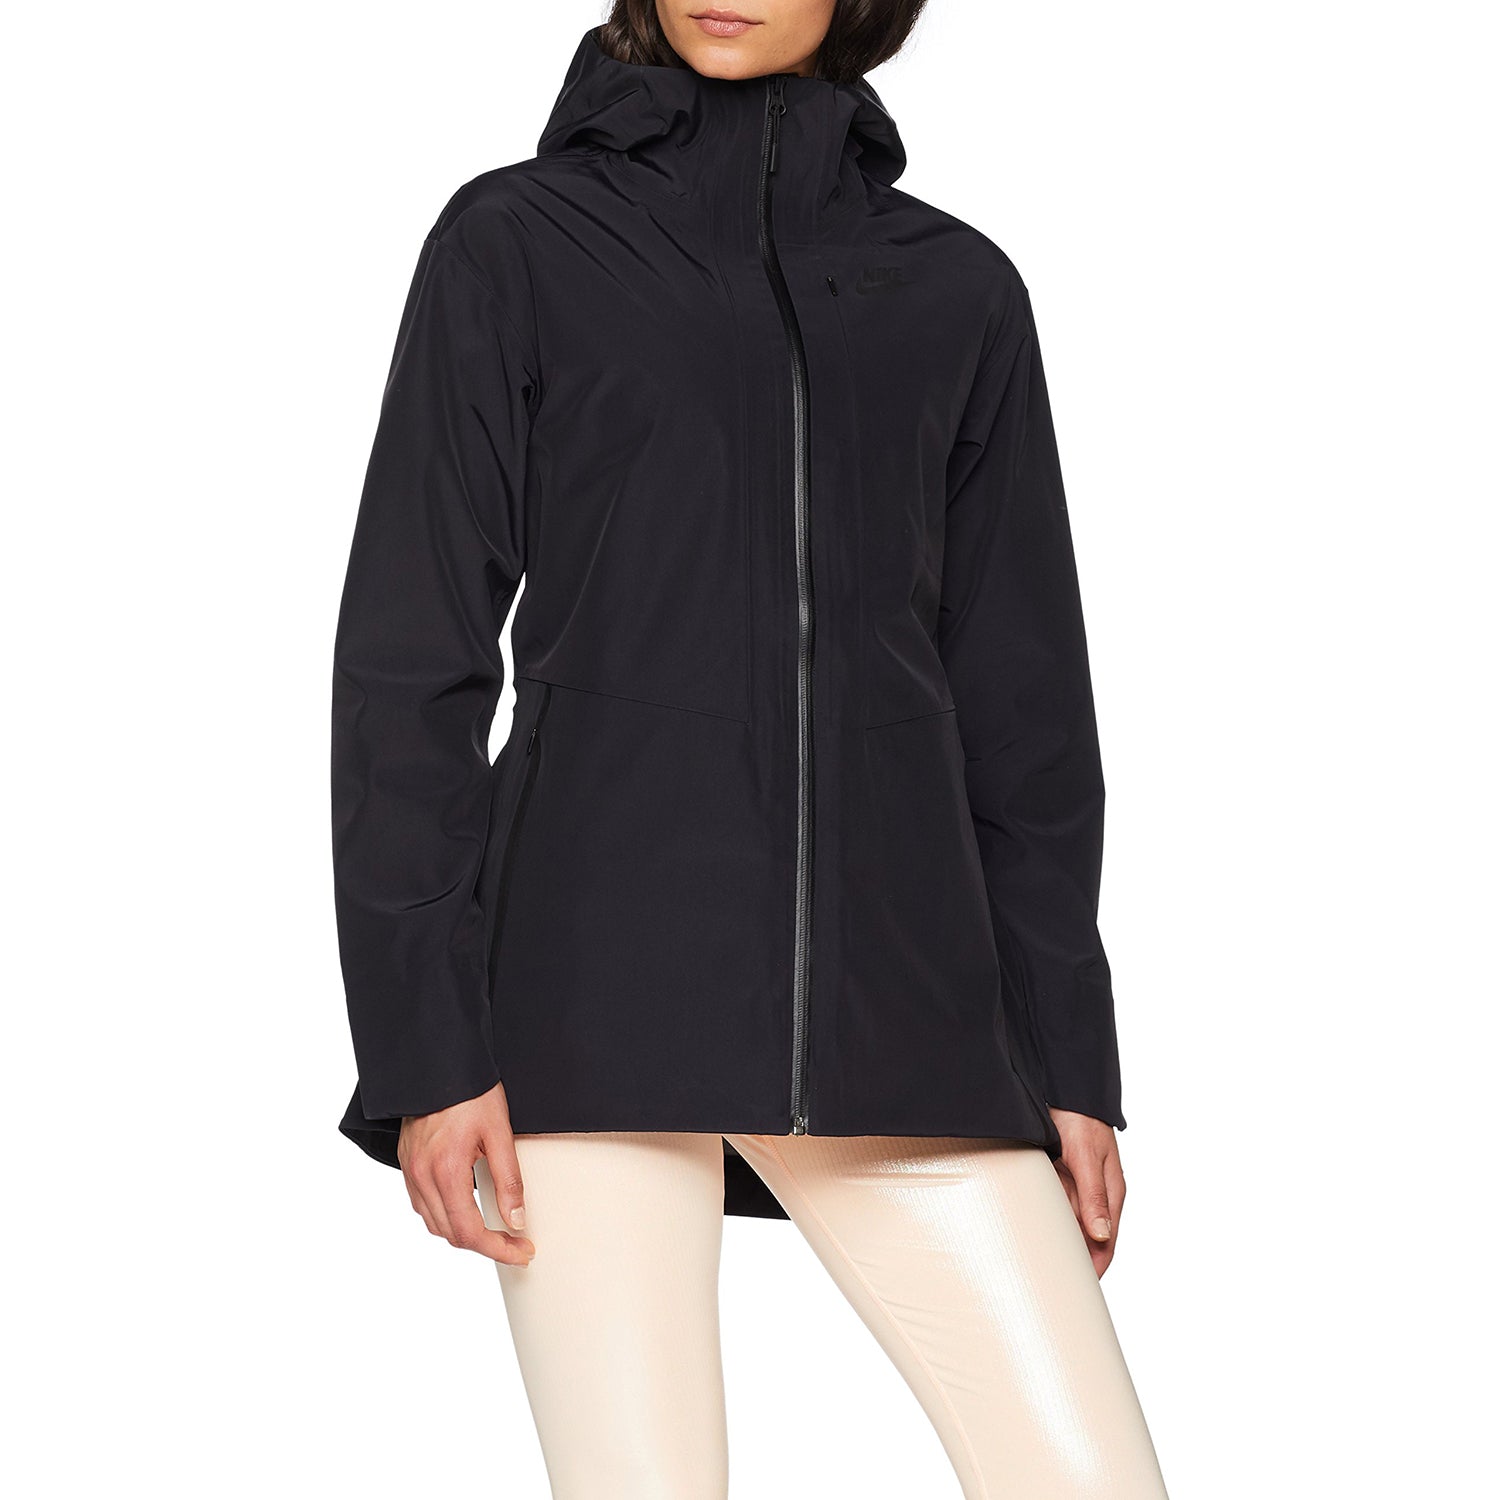 Nike Winter Warm Raincoat  Womens Style : 883489